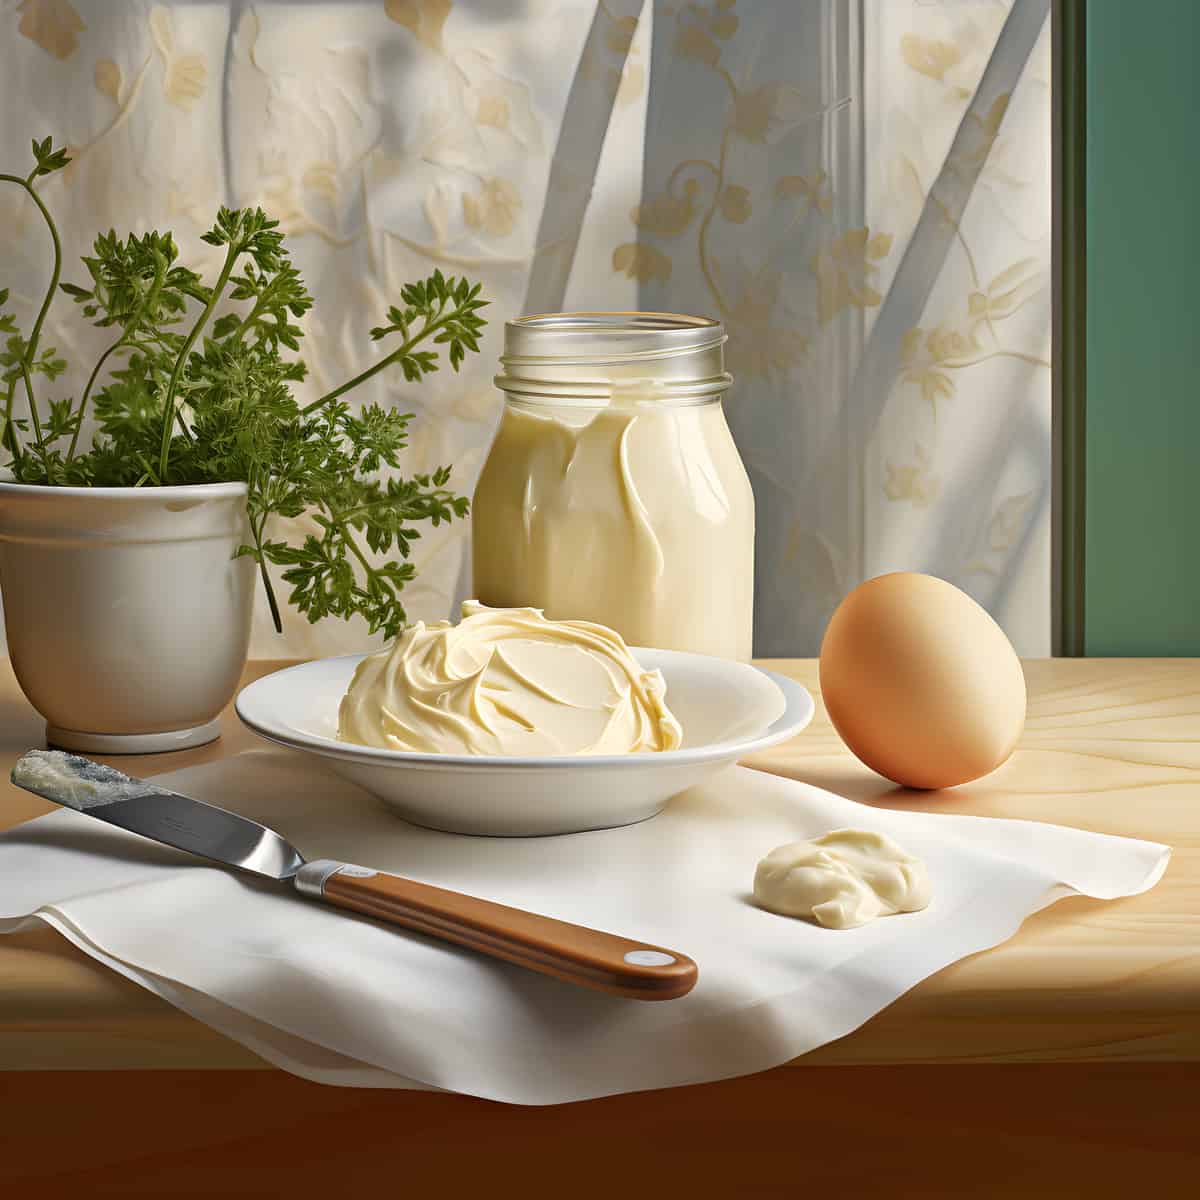 Mayonnaise on a kitchen counter